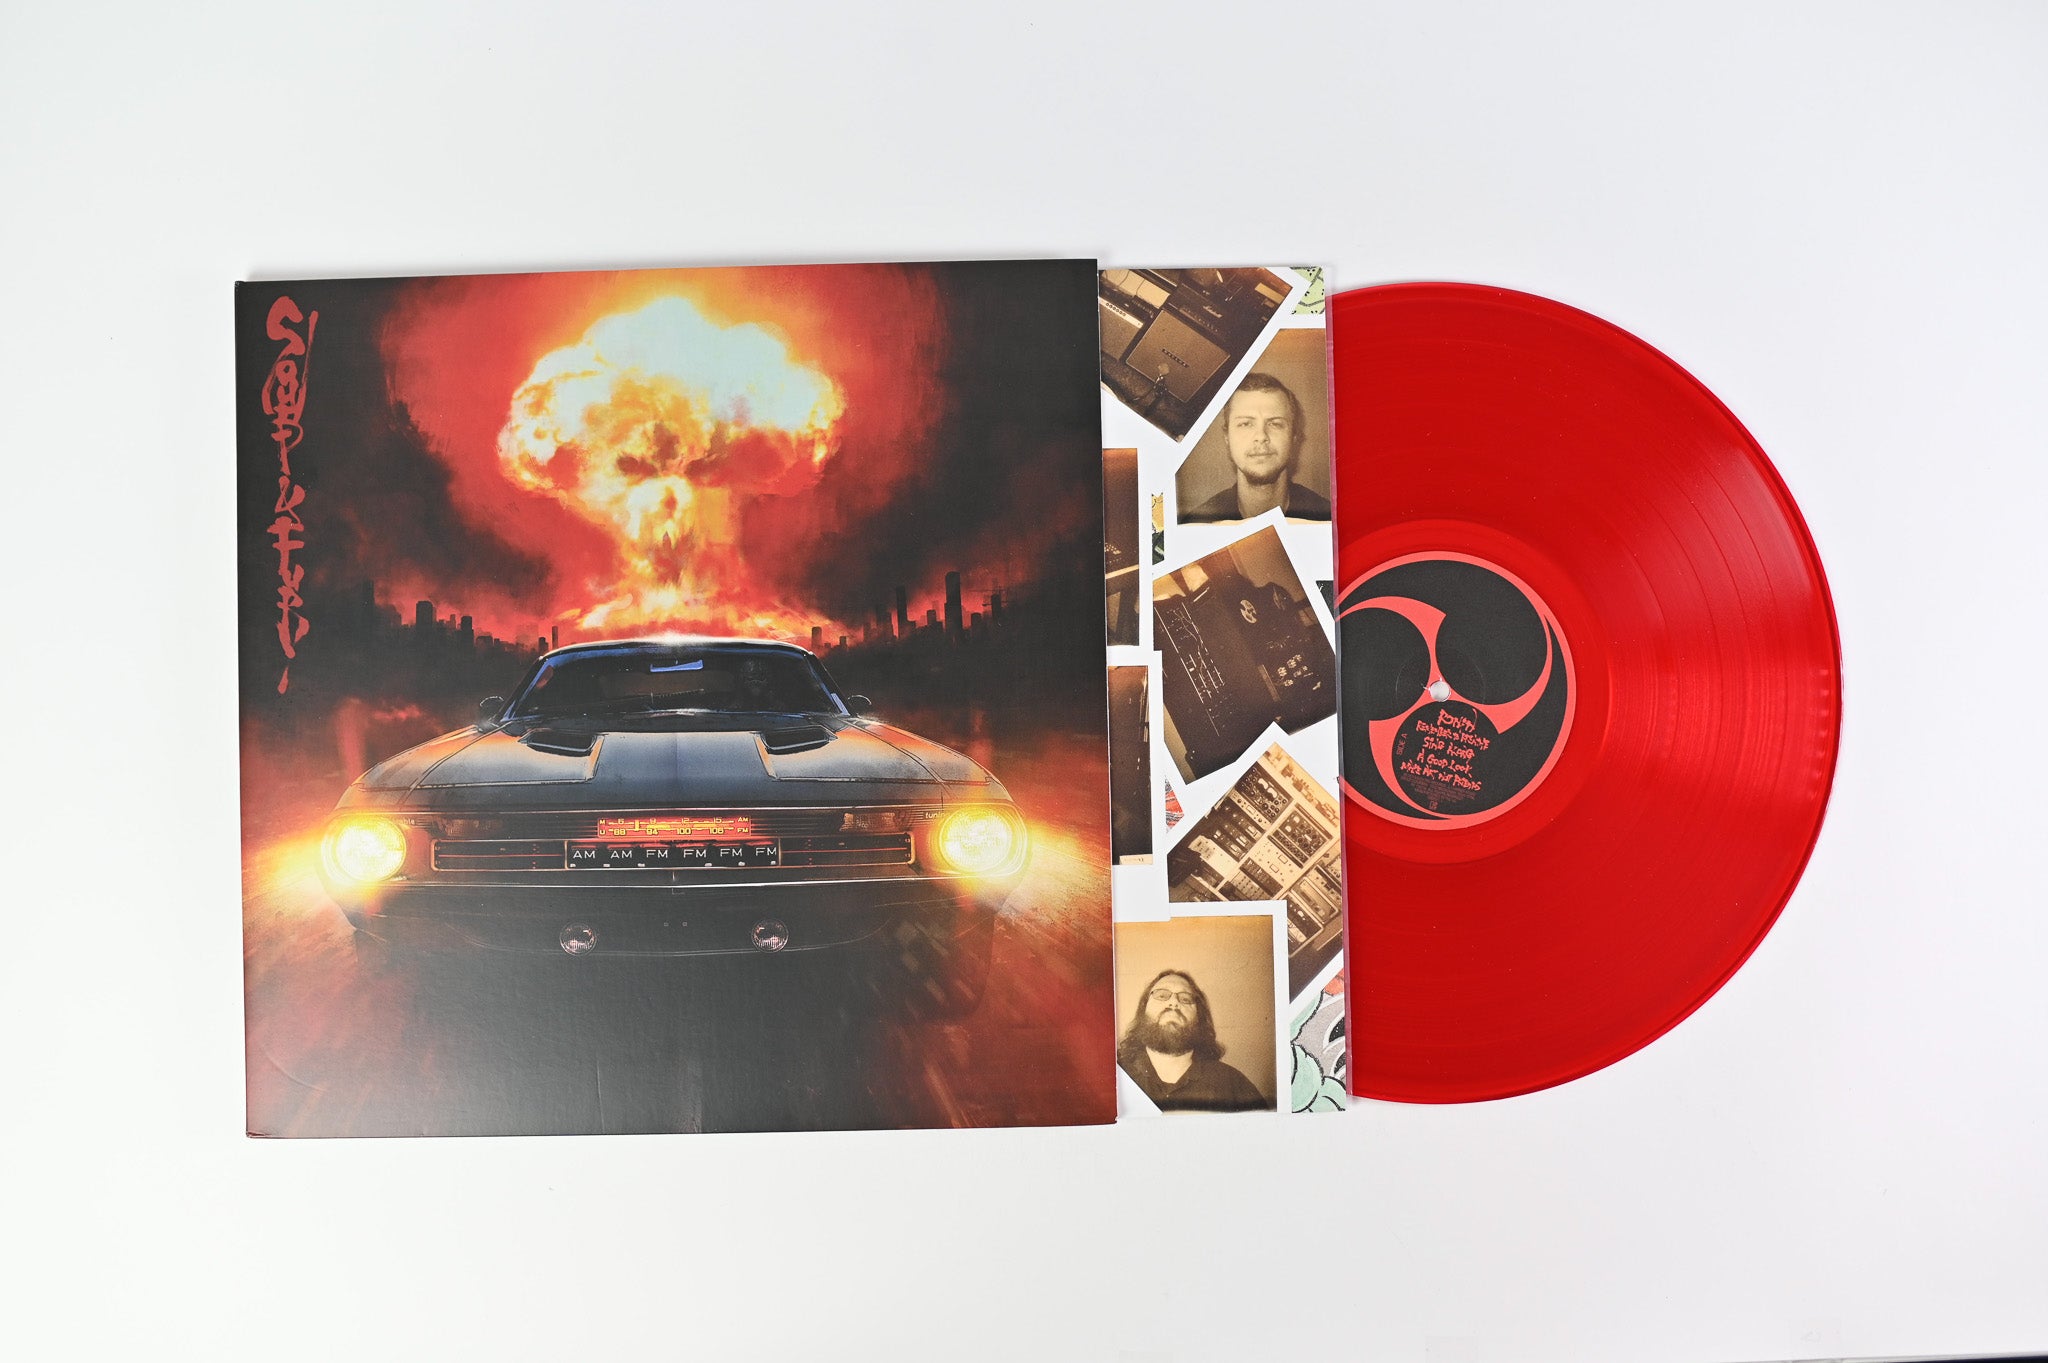 Sturgill Simpson - Sound & Fury on Elektra 180 Gram Blood Red Vinyl